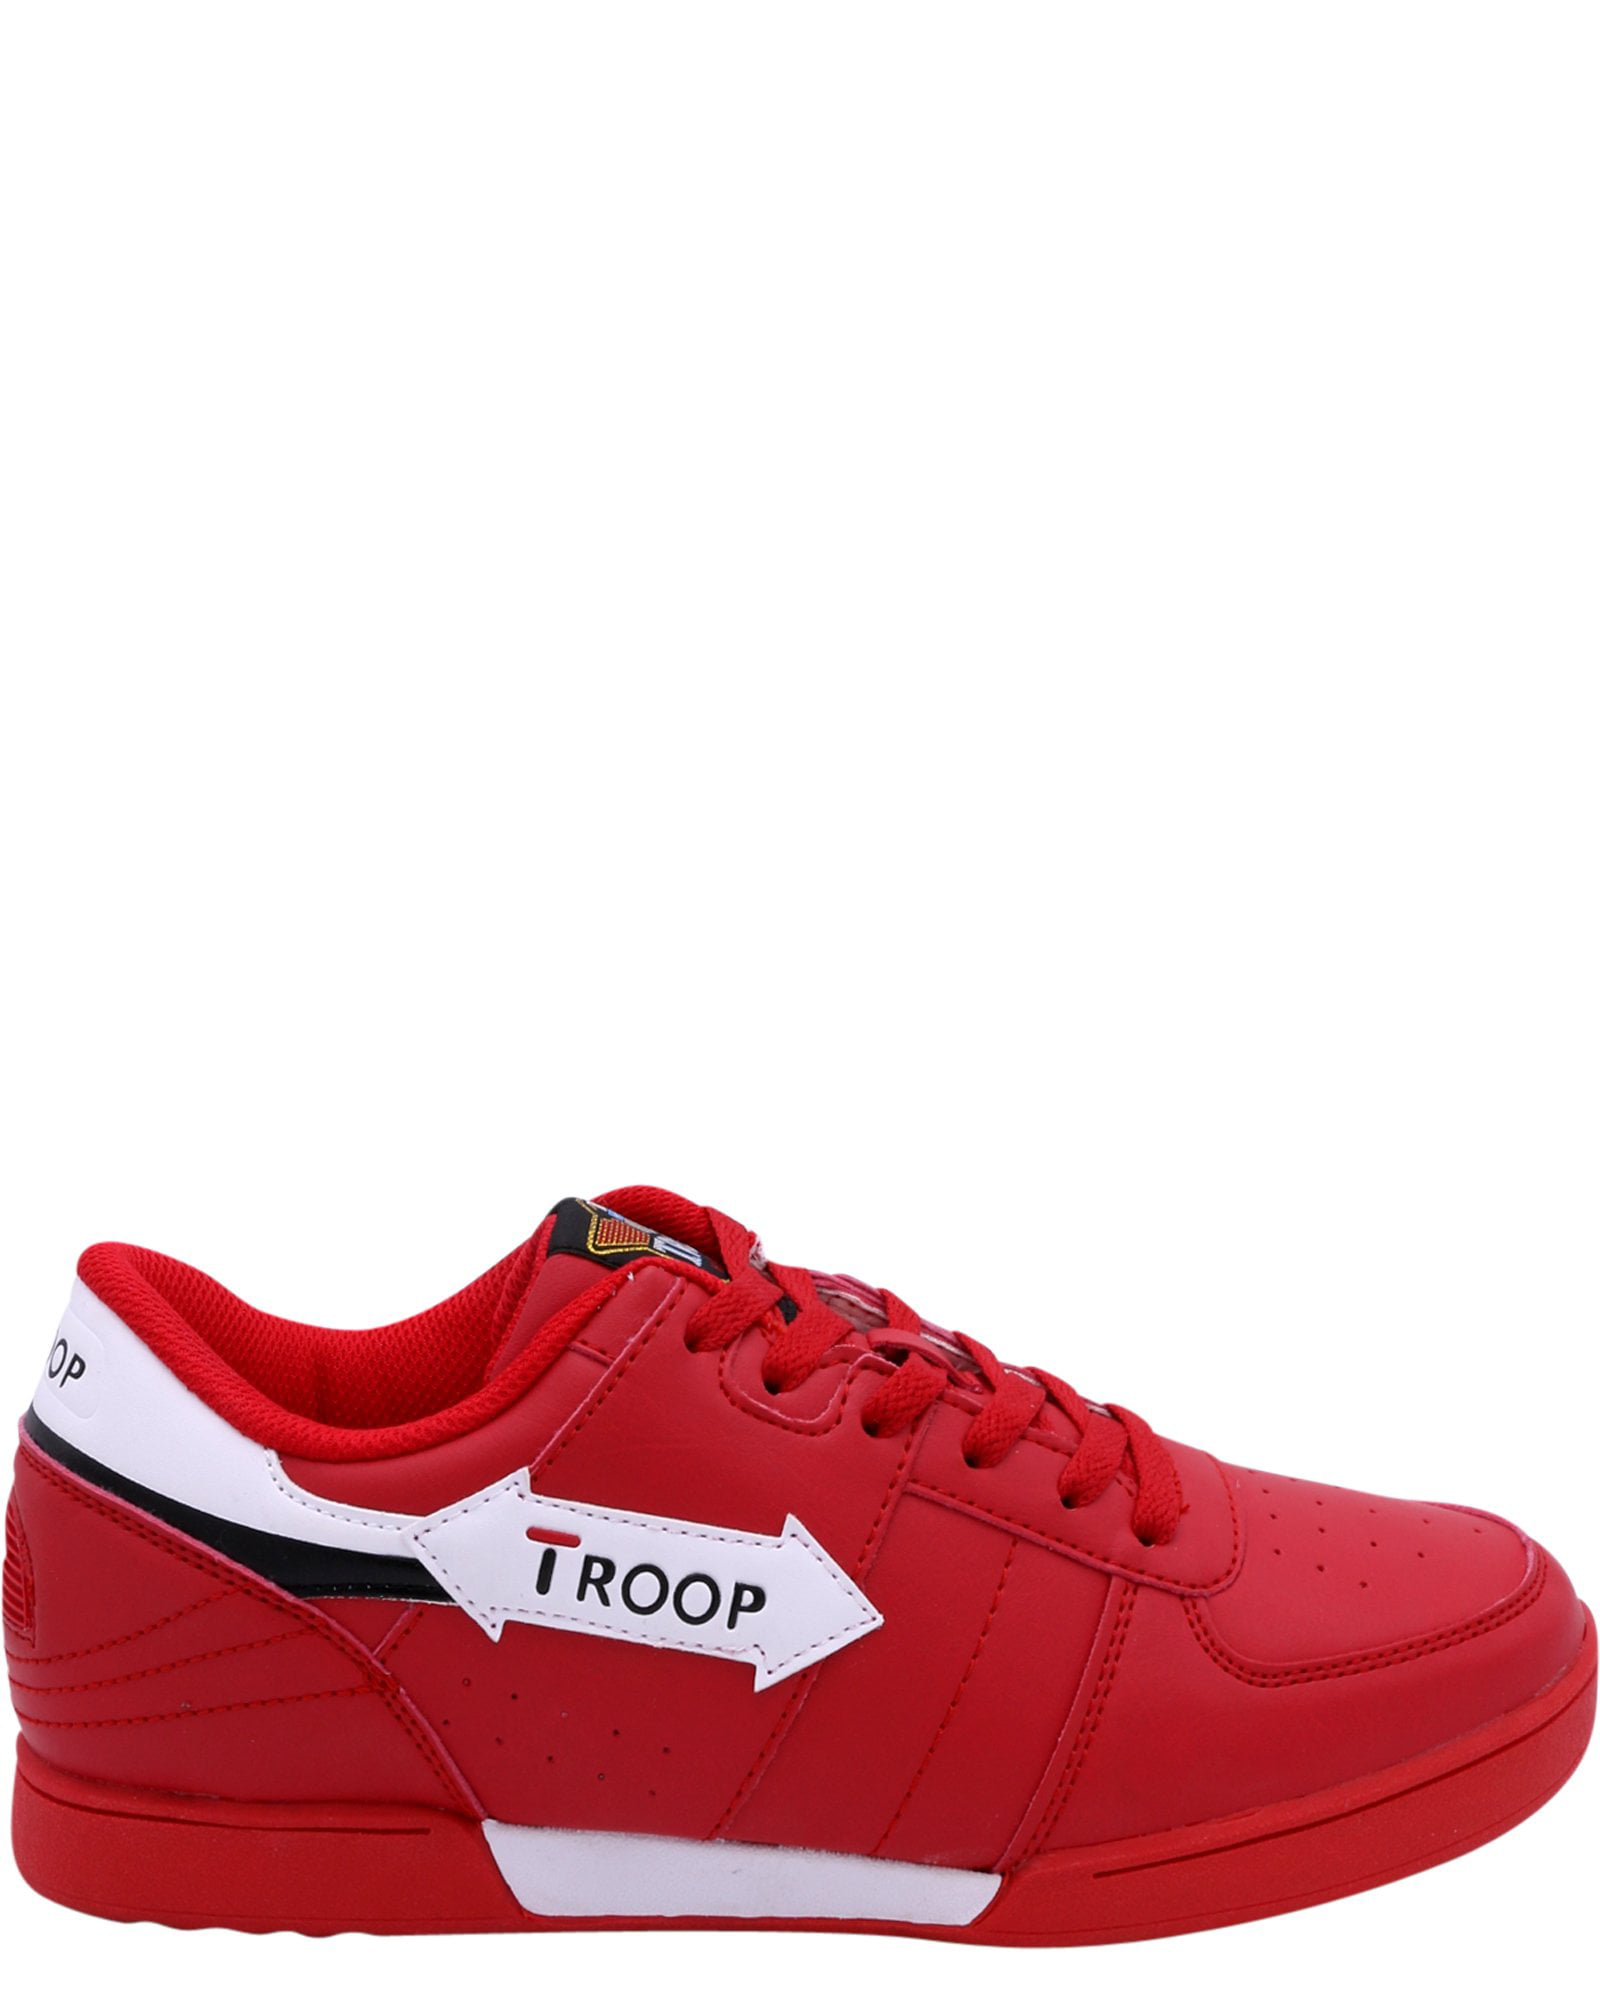 walmart red sneakers